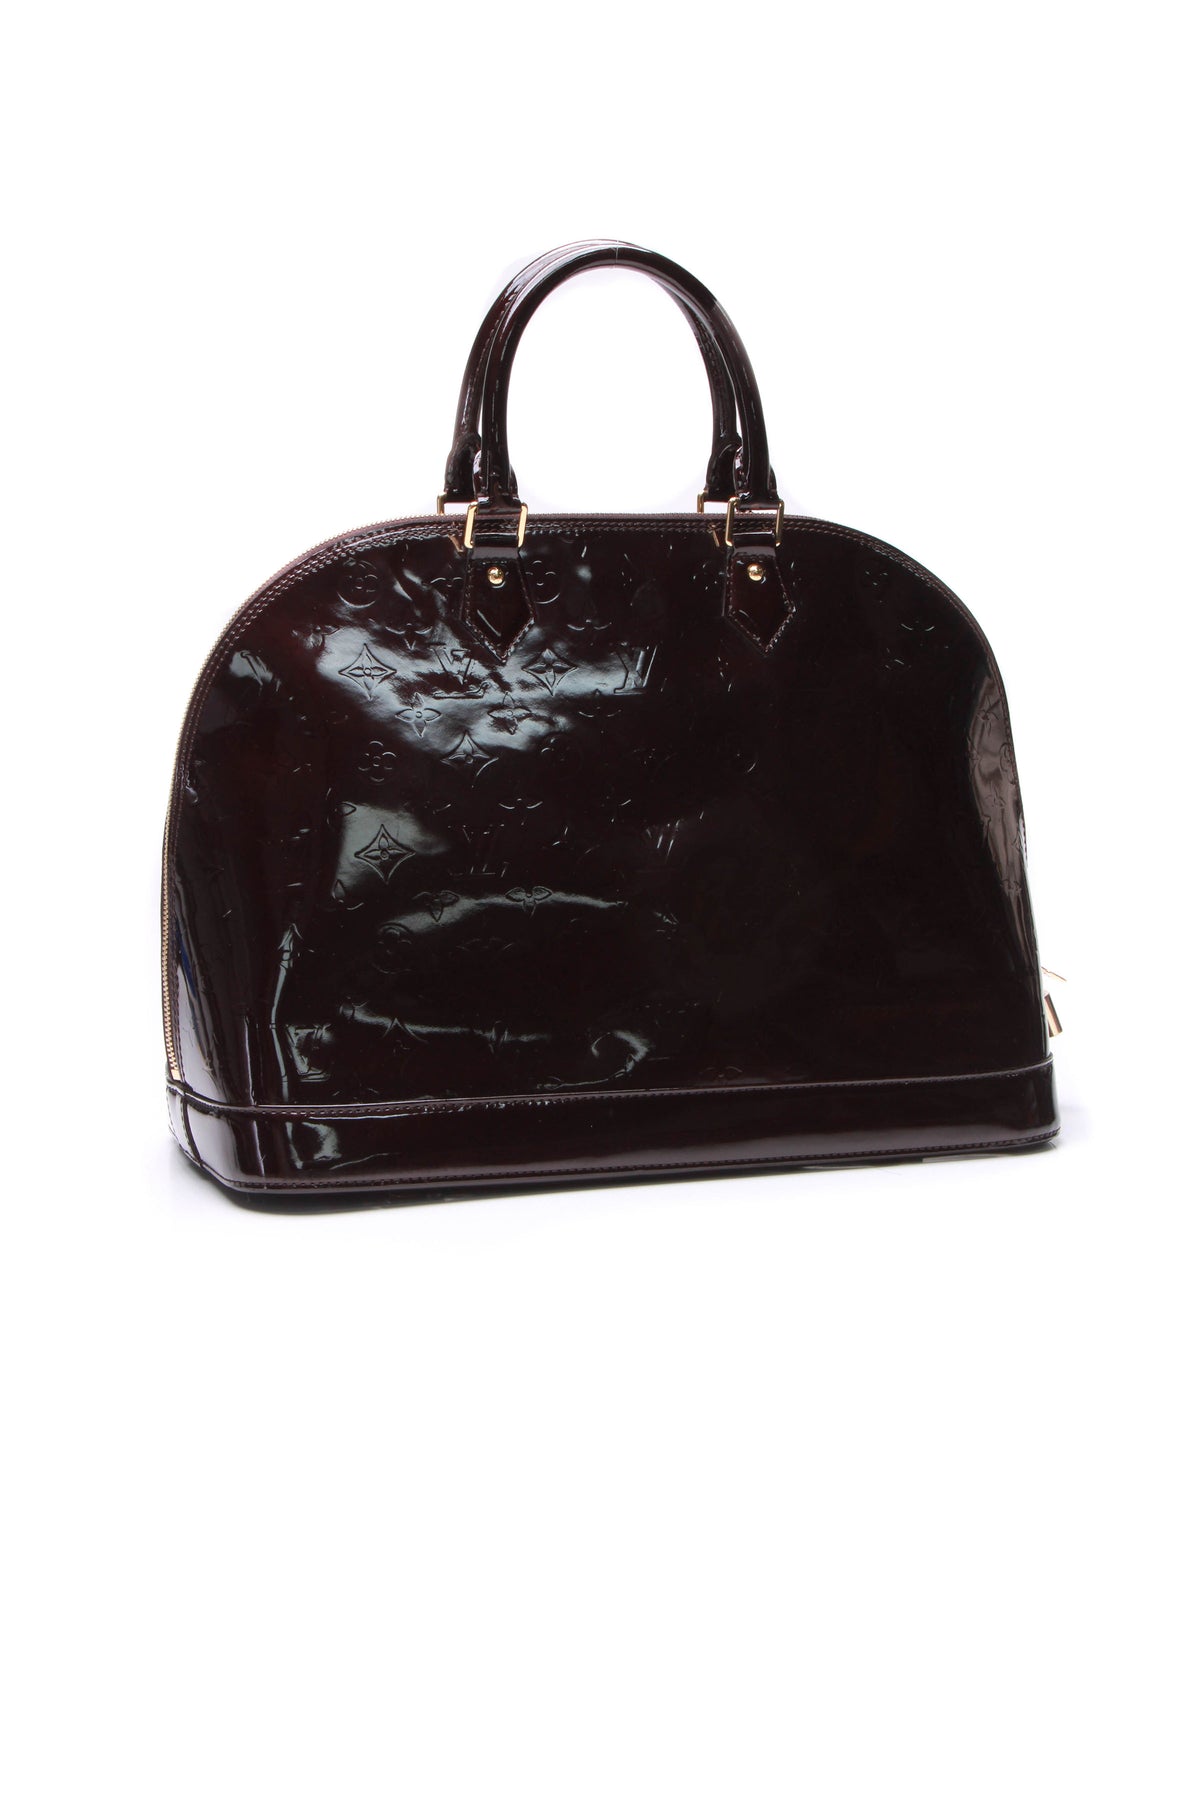 Louis Vuitton LV dust bag jewelly wallet bag watch handbag - 29JAN